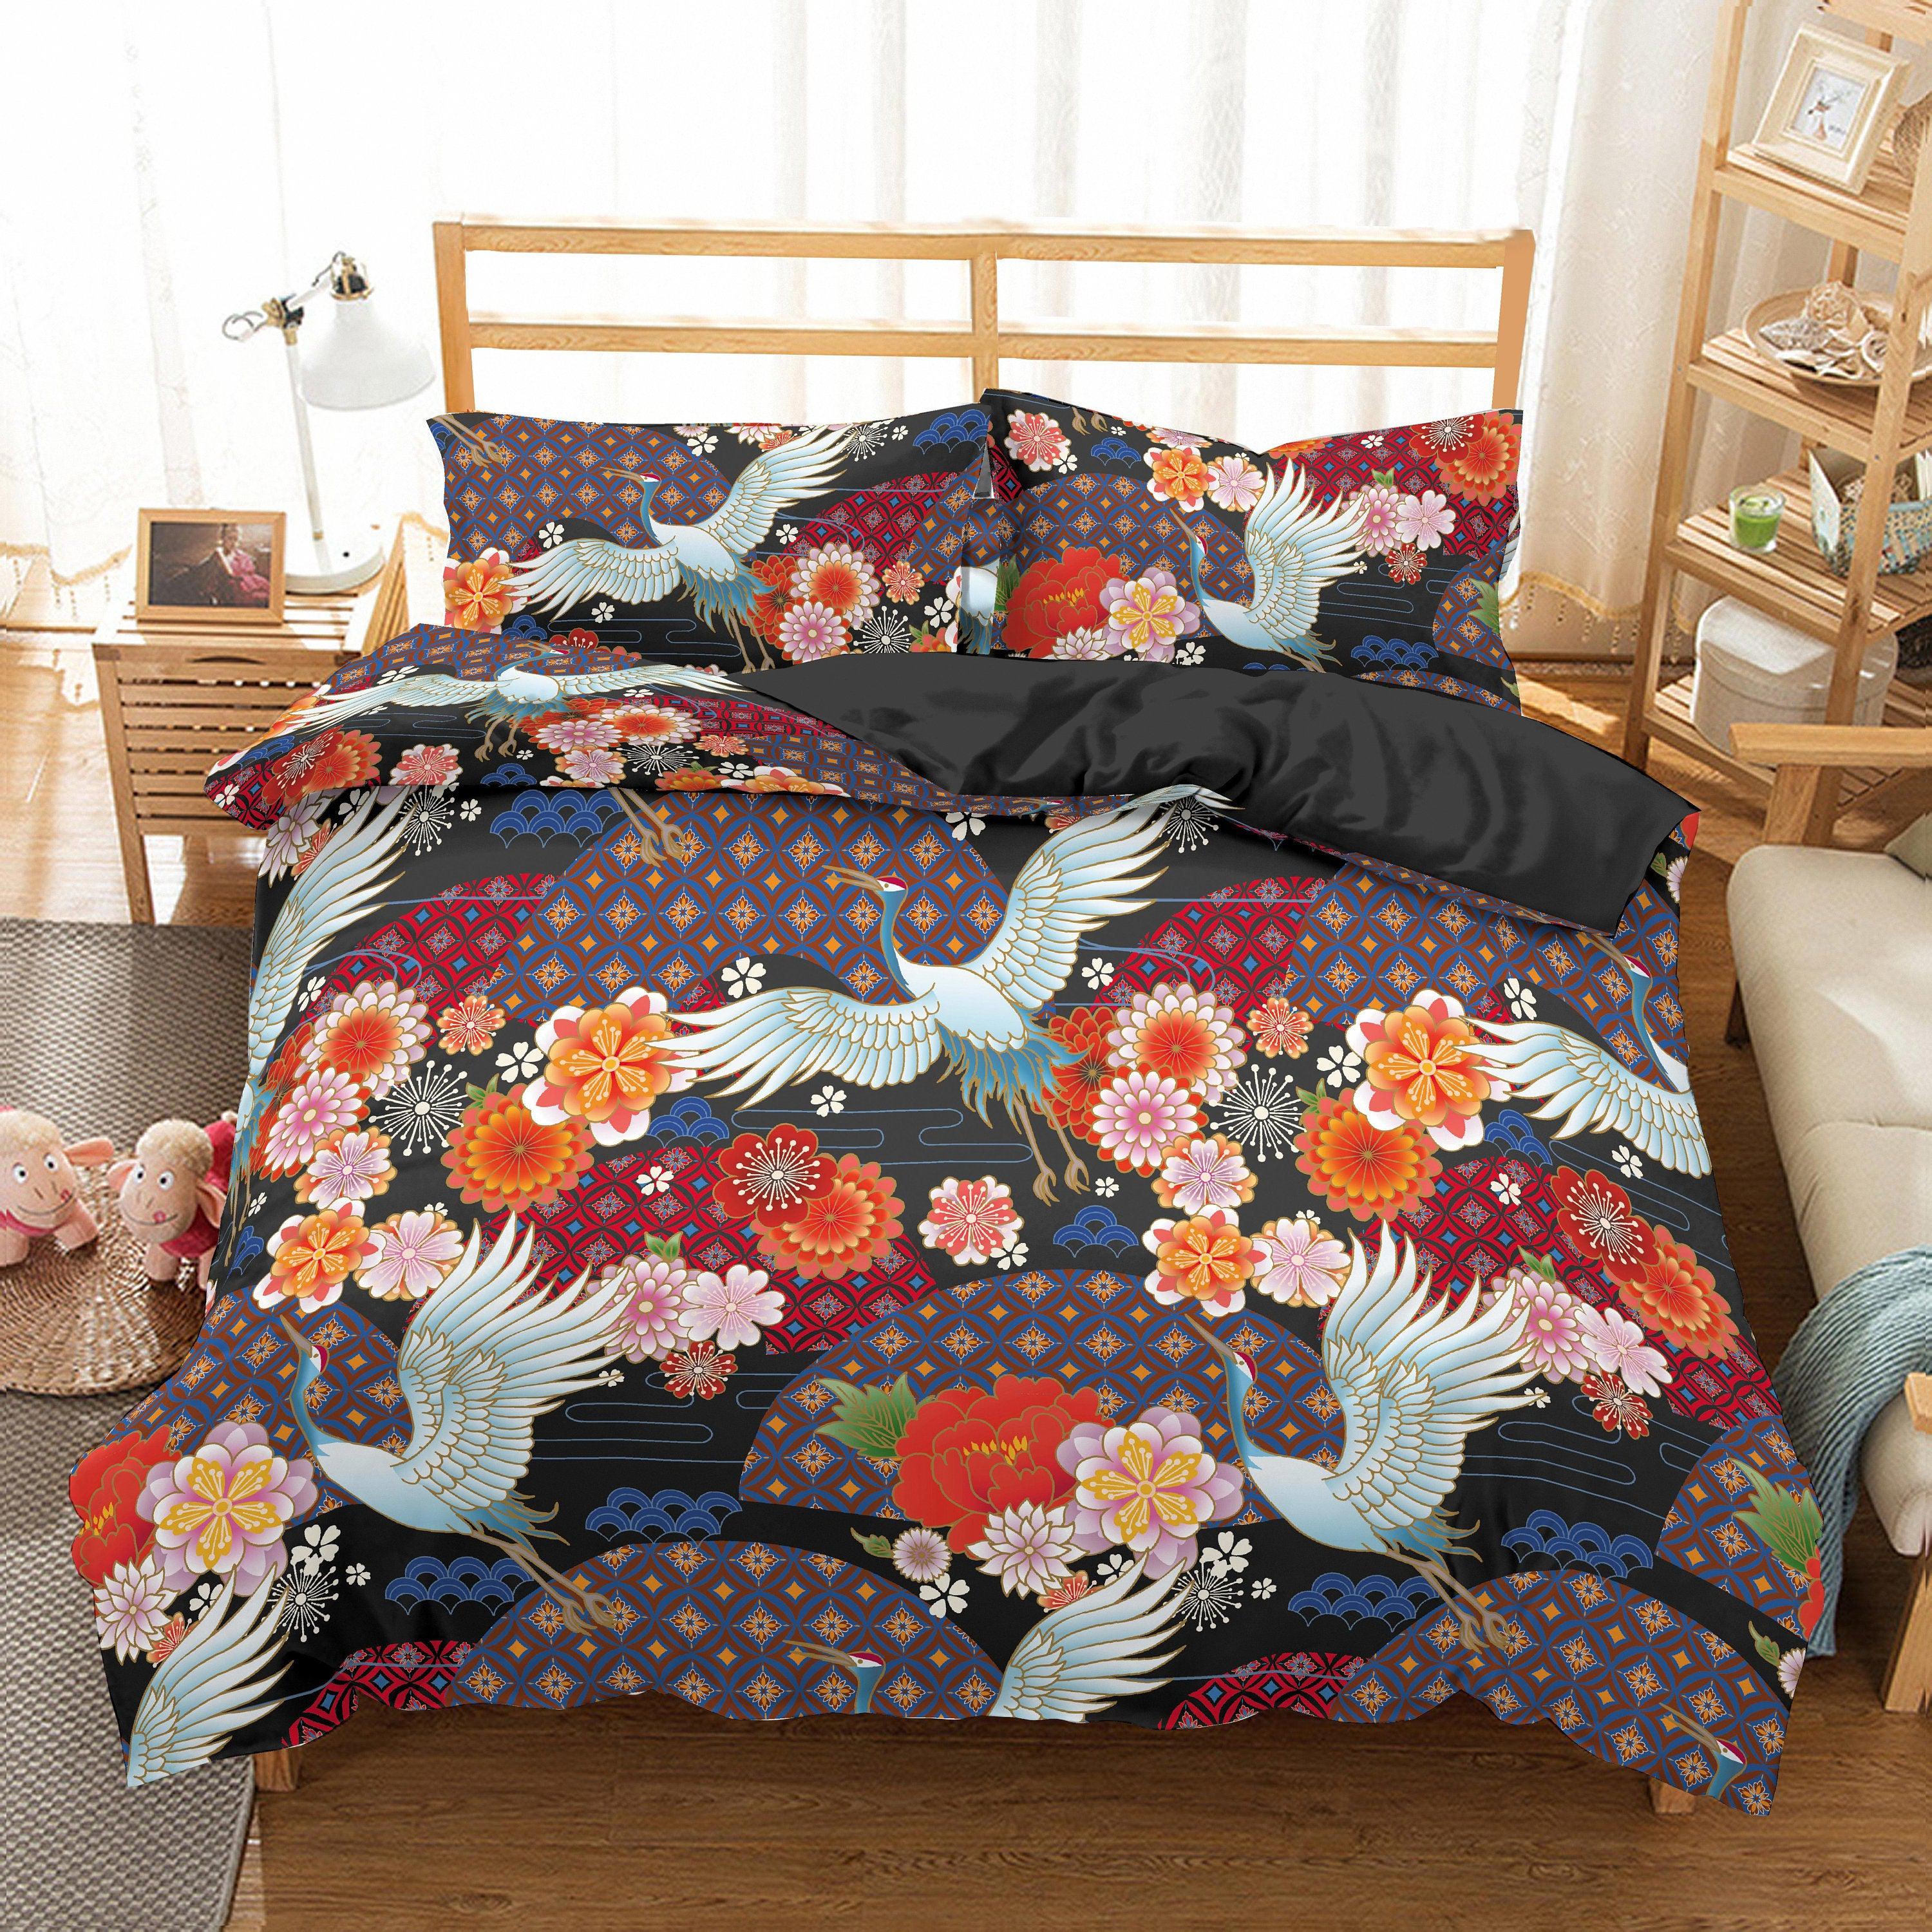 daintyduvet Japanese Black Duvet Cover Set, Floral Kimono & Crane Bird Bedding Set with Pillow Cover Case